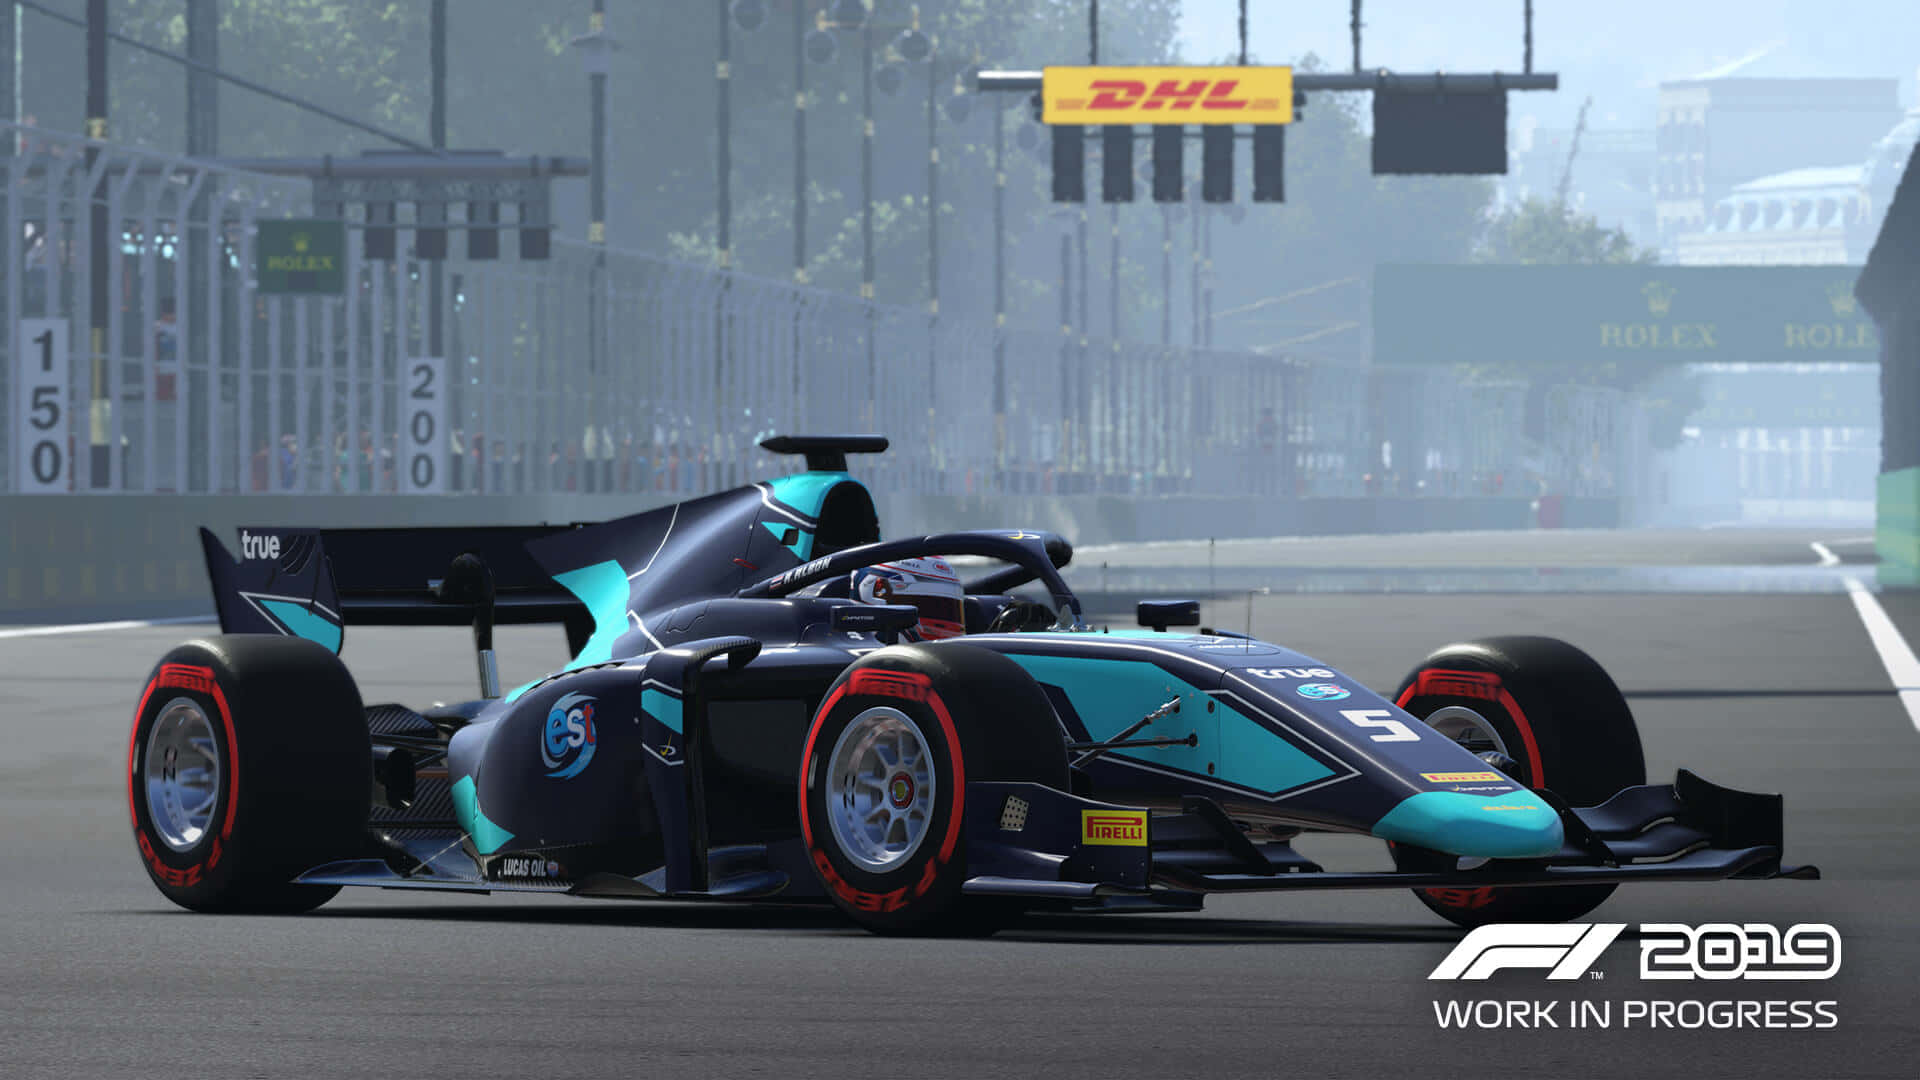 Mercedes Amg Hd F1 2019 Racetrack Background